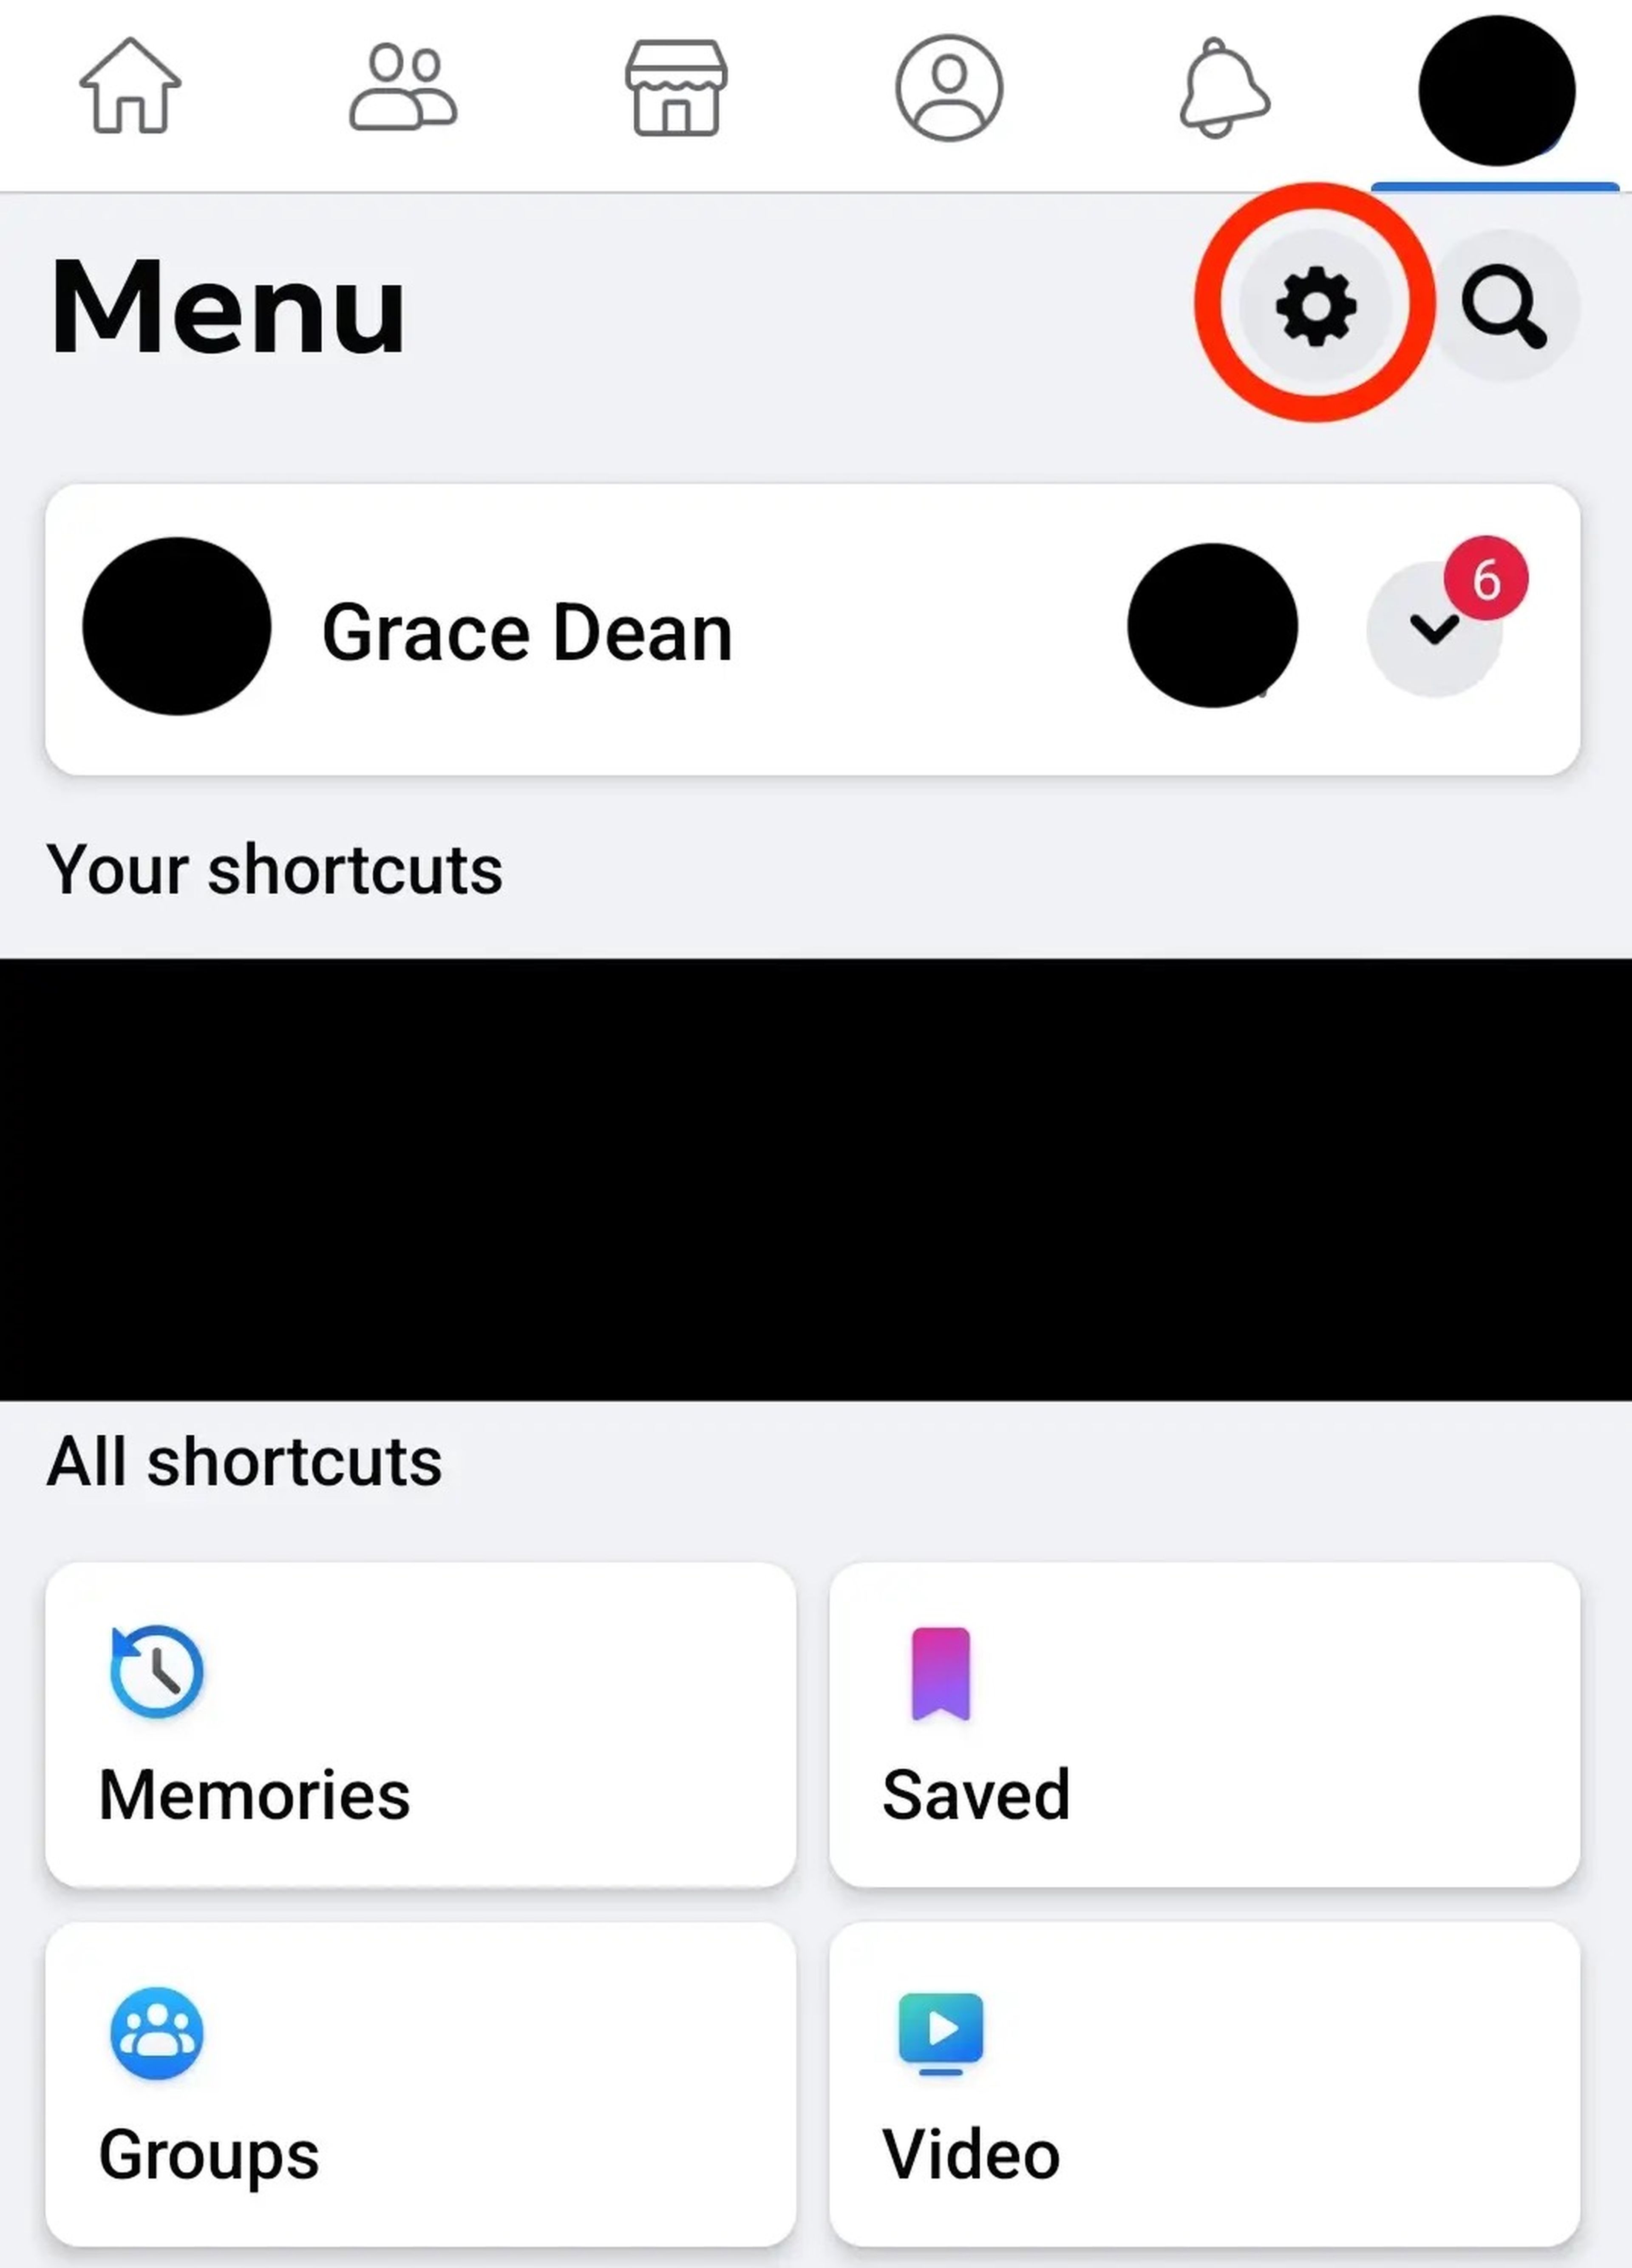 A screenshot of a Facebook menu page